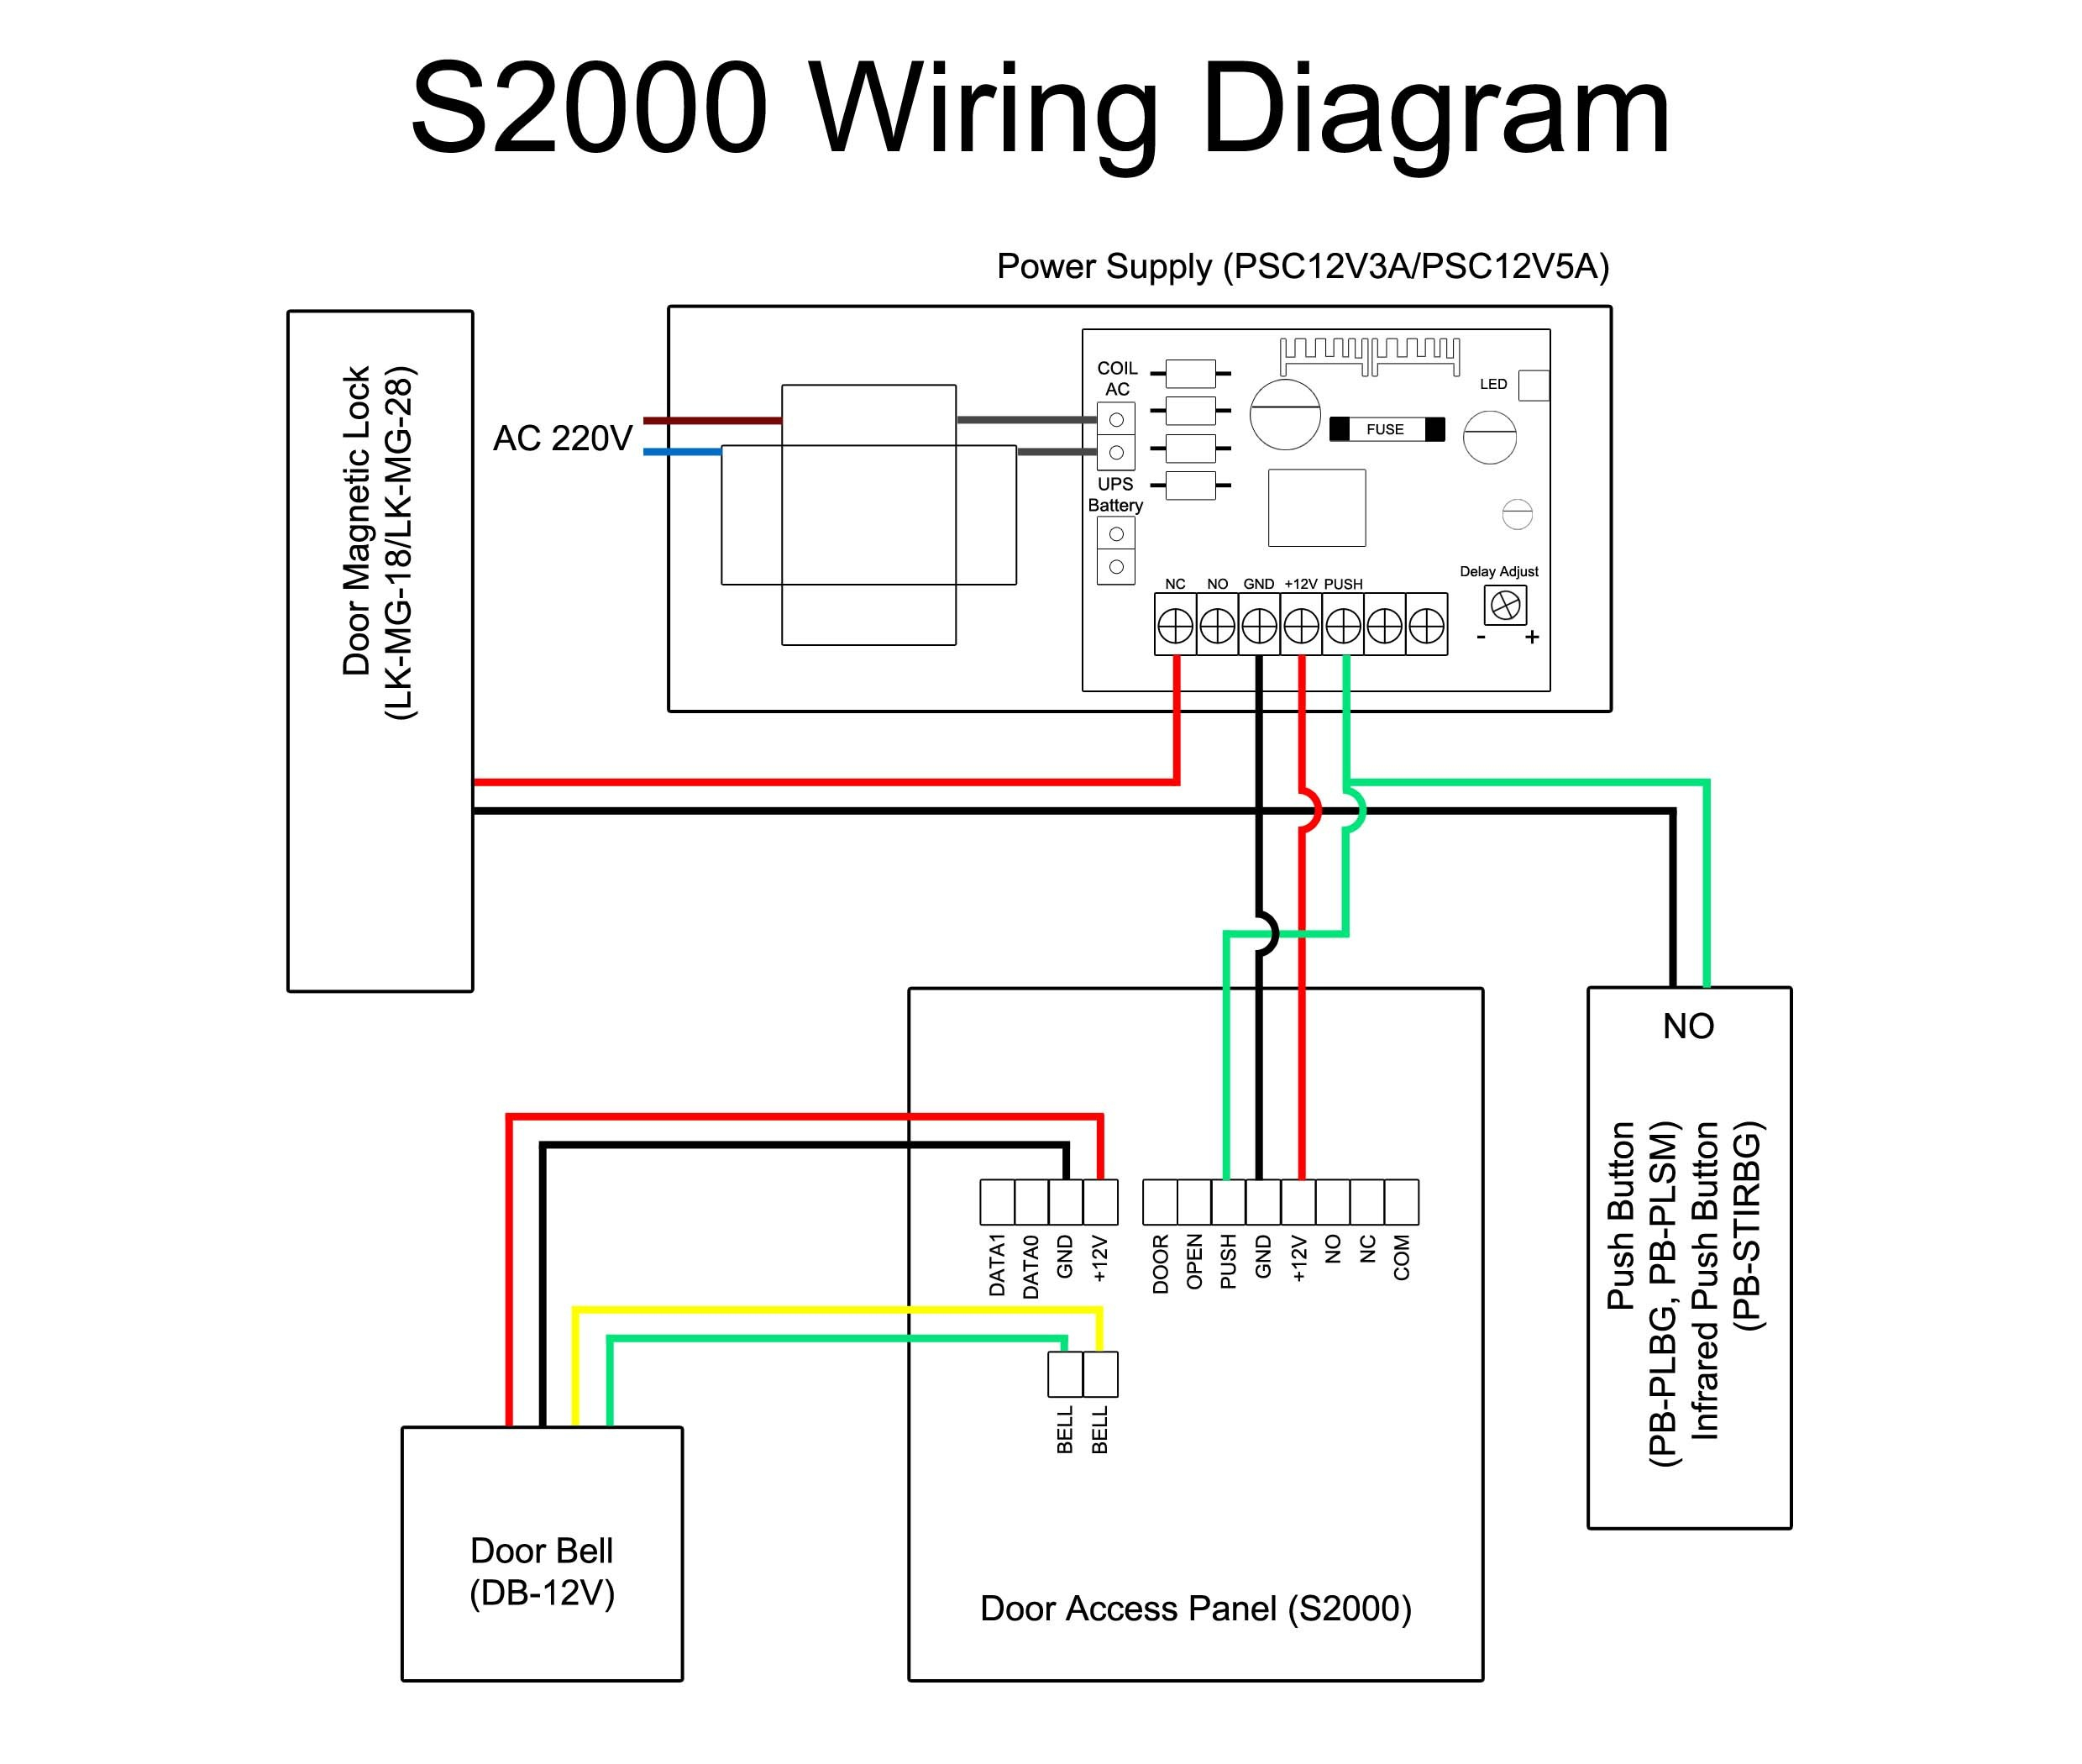 Diagram 1998 Voyager Wiring Diagram Full Version Hd Quality Wiring Diagram Diagramsteach Esserevolontario It